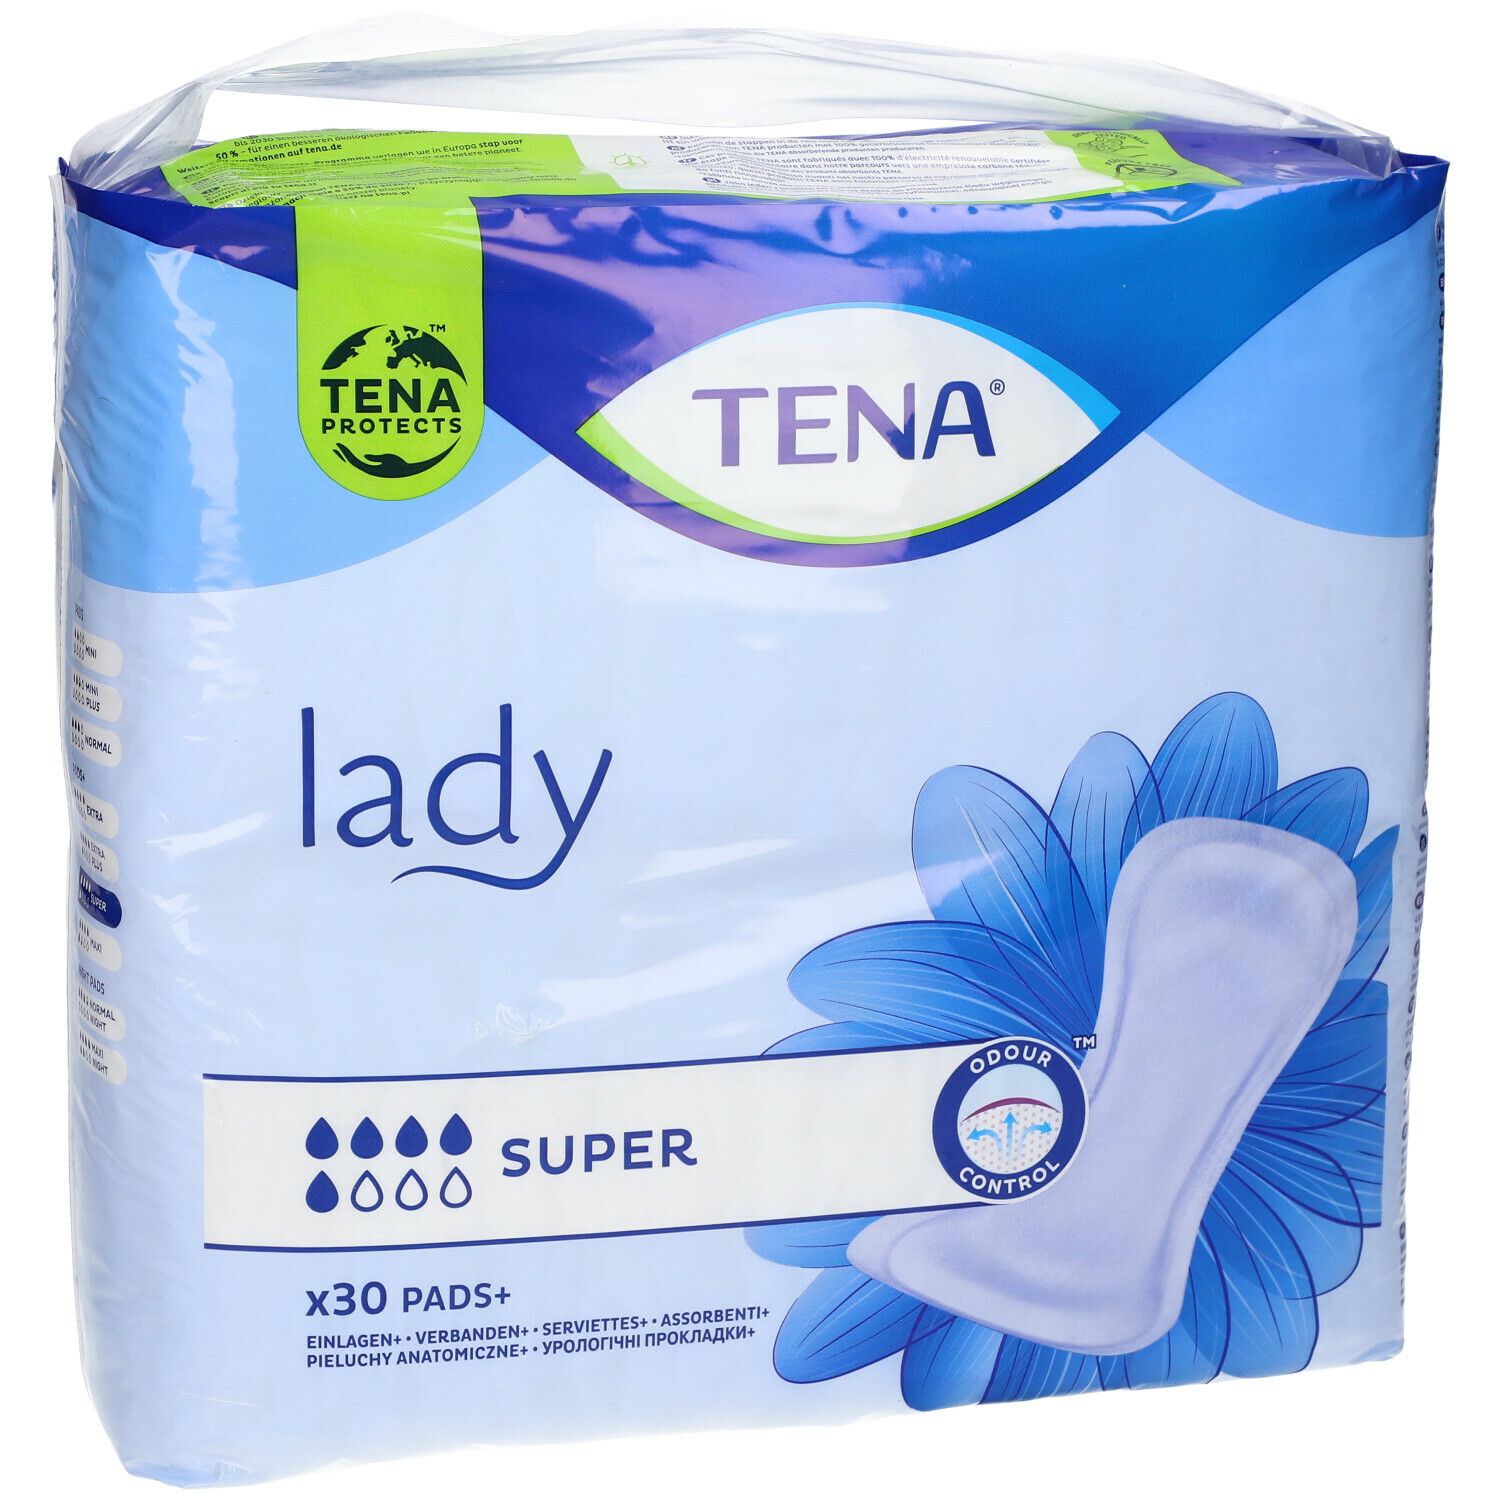 TENA® Lady Odour Control Super